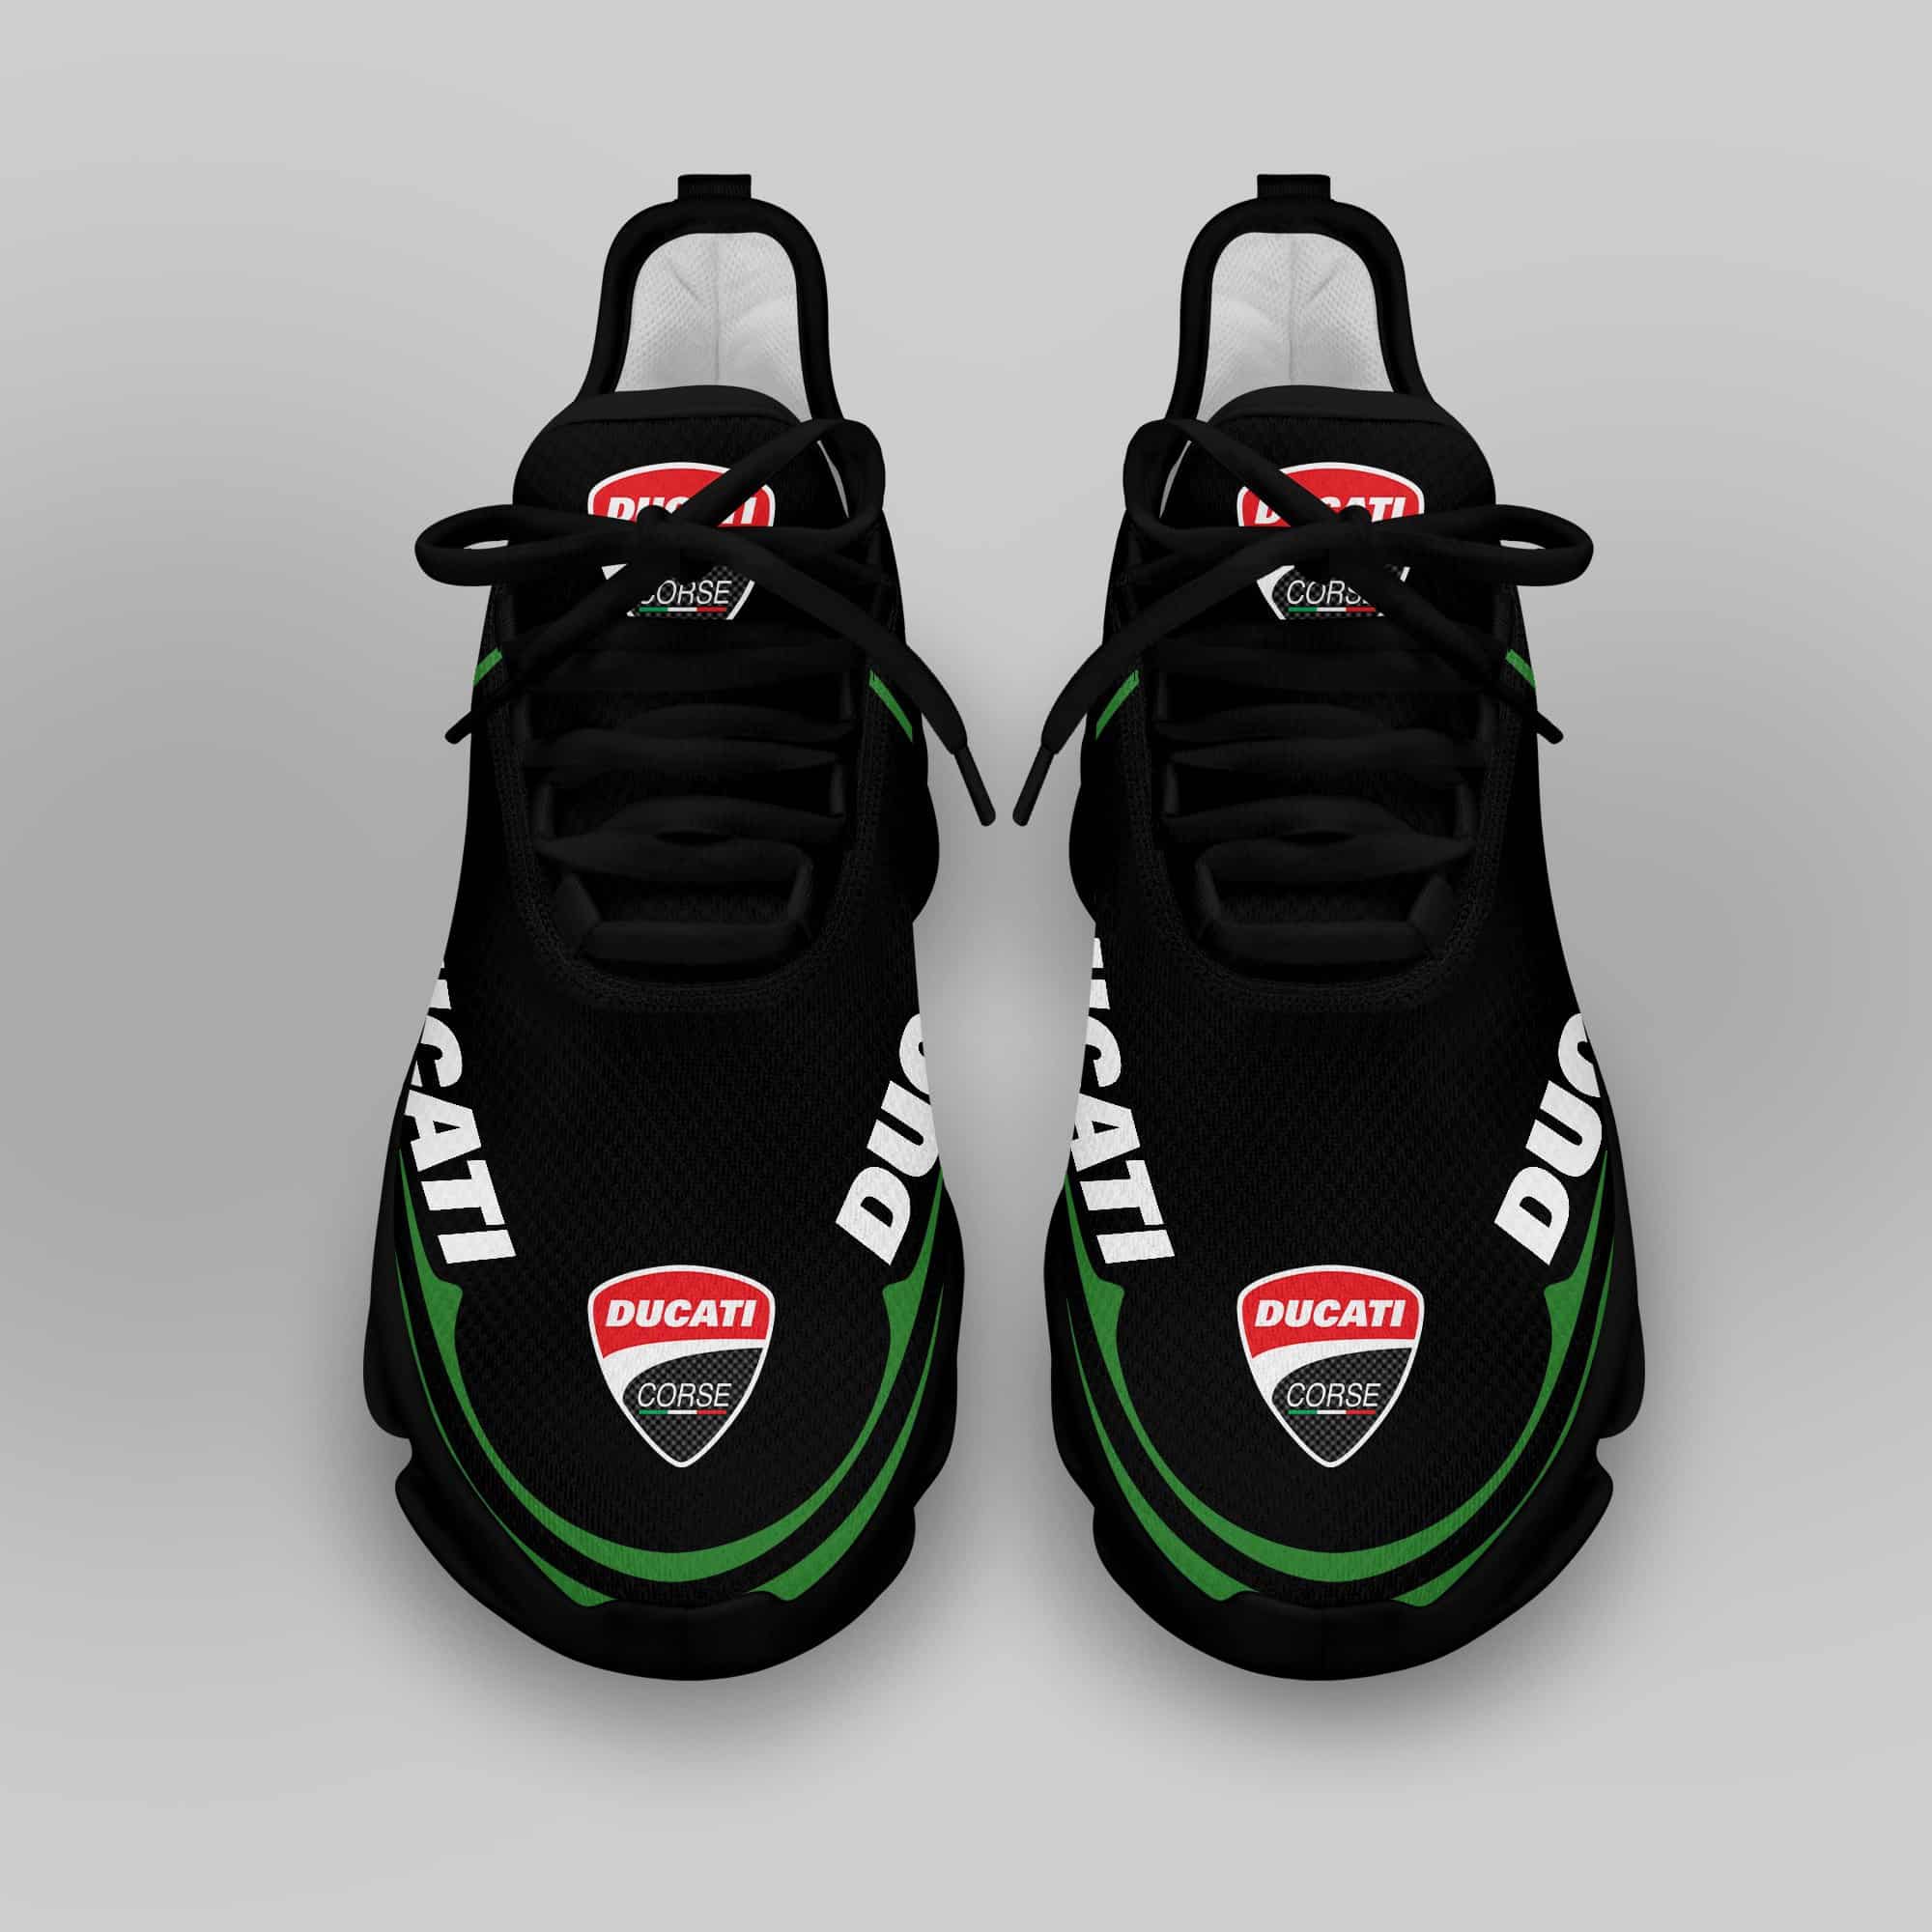 Ducati Racing Running Shoes Max Soul Shoes Sneakers Ver 45 4